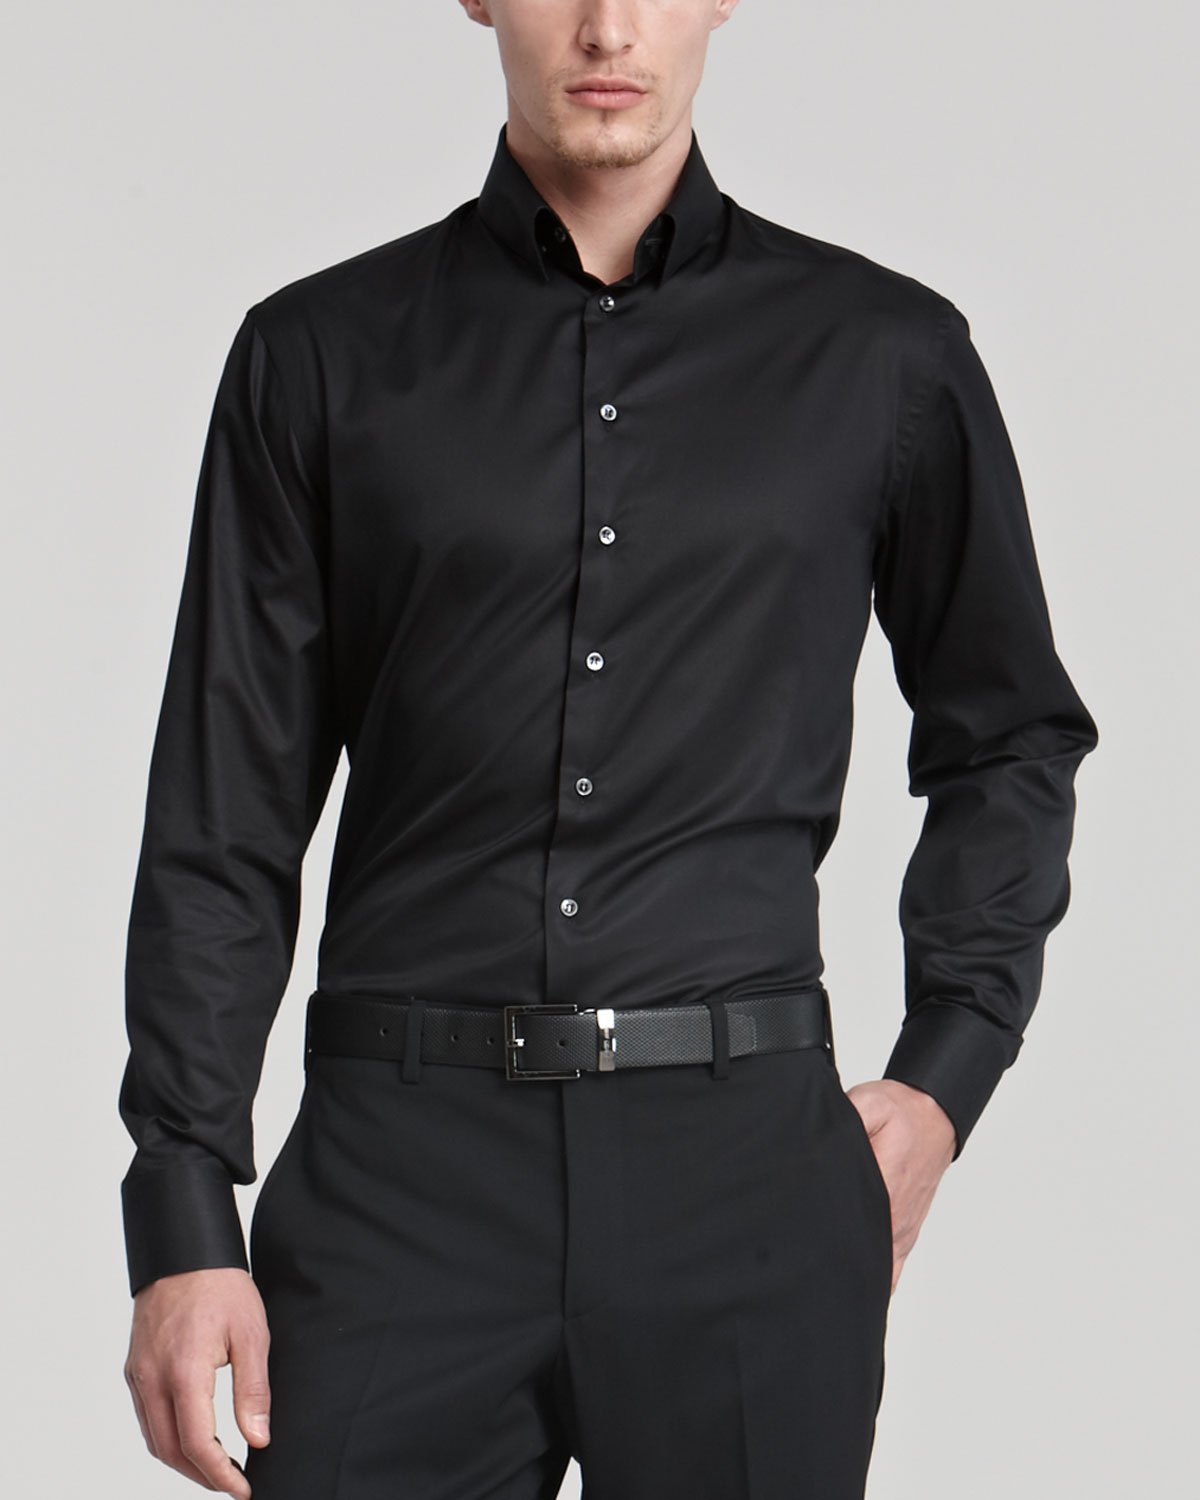 Lyst - Giorgio Armani Woven Dress Shirt in Black for Men